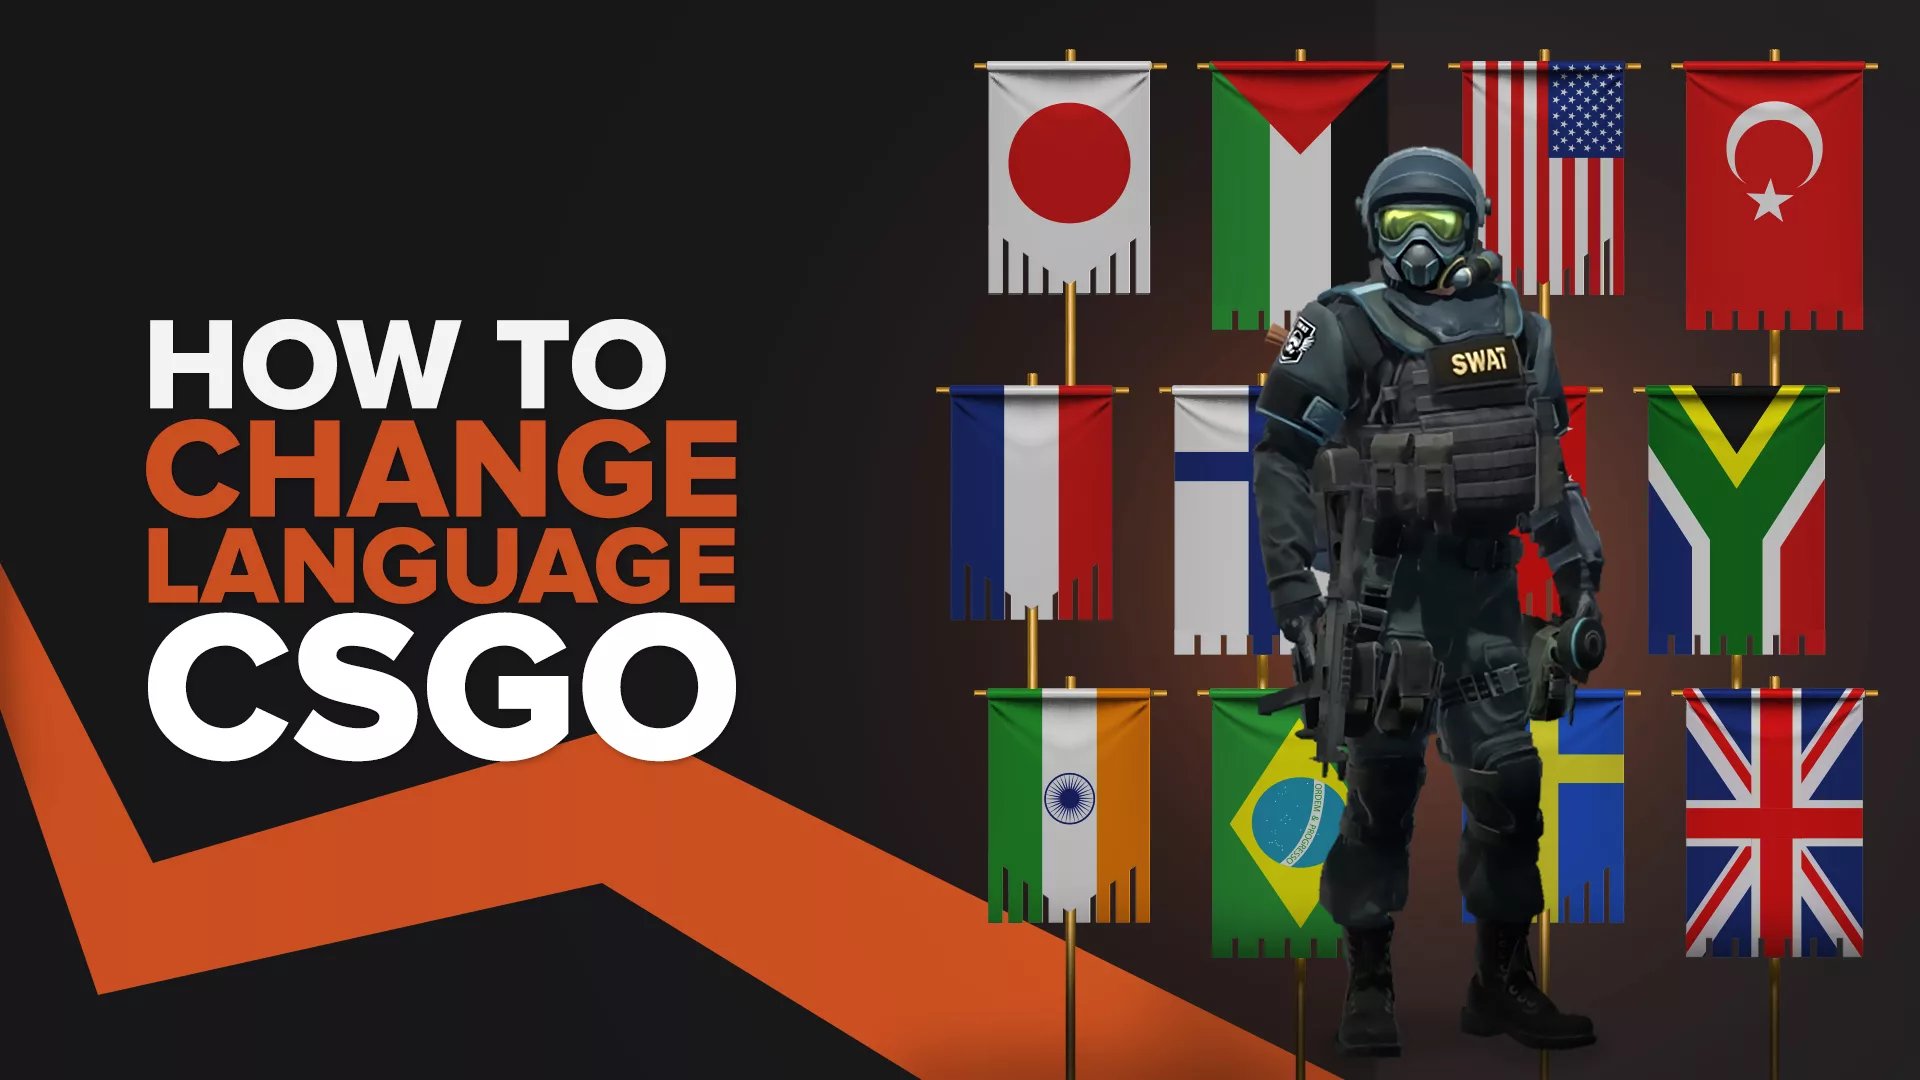 How To Change Language in CSGO